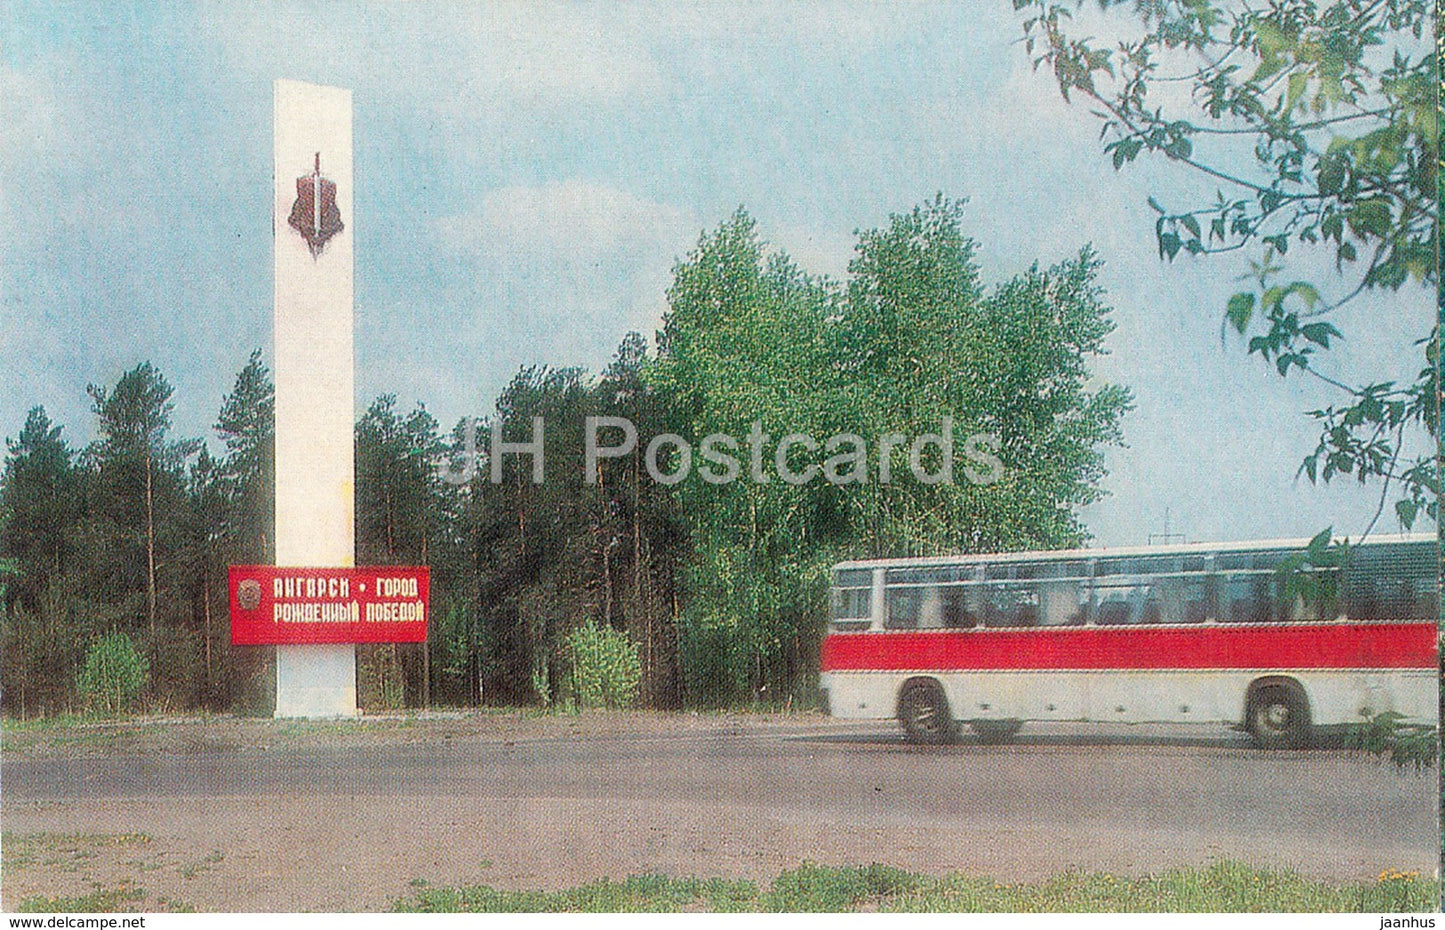 Angarsk - Stele City Born by Victory - bus Ikarus - 1986 - Russia USSR - unused - JH Postcards